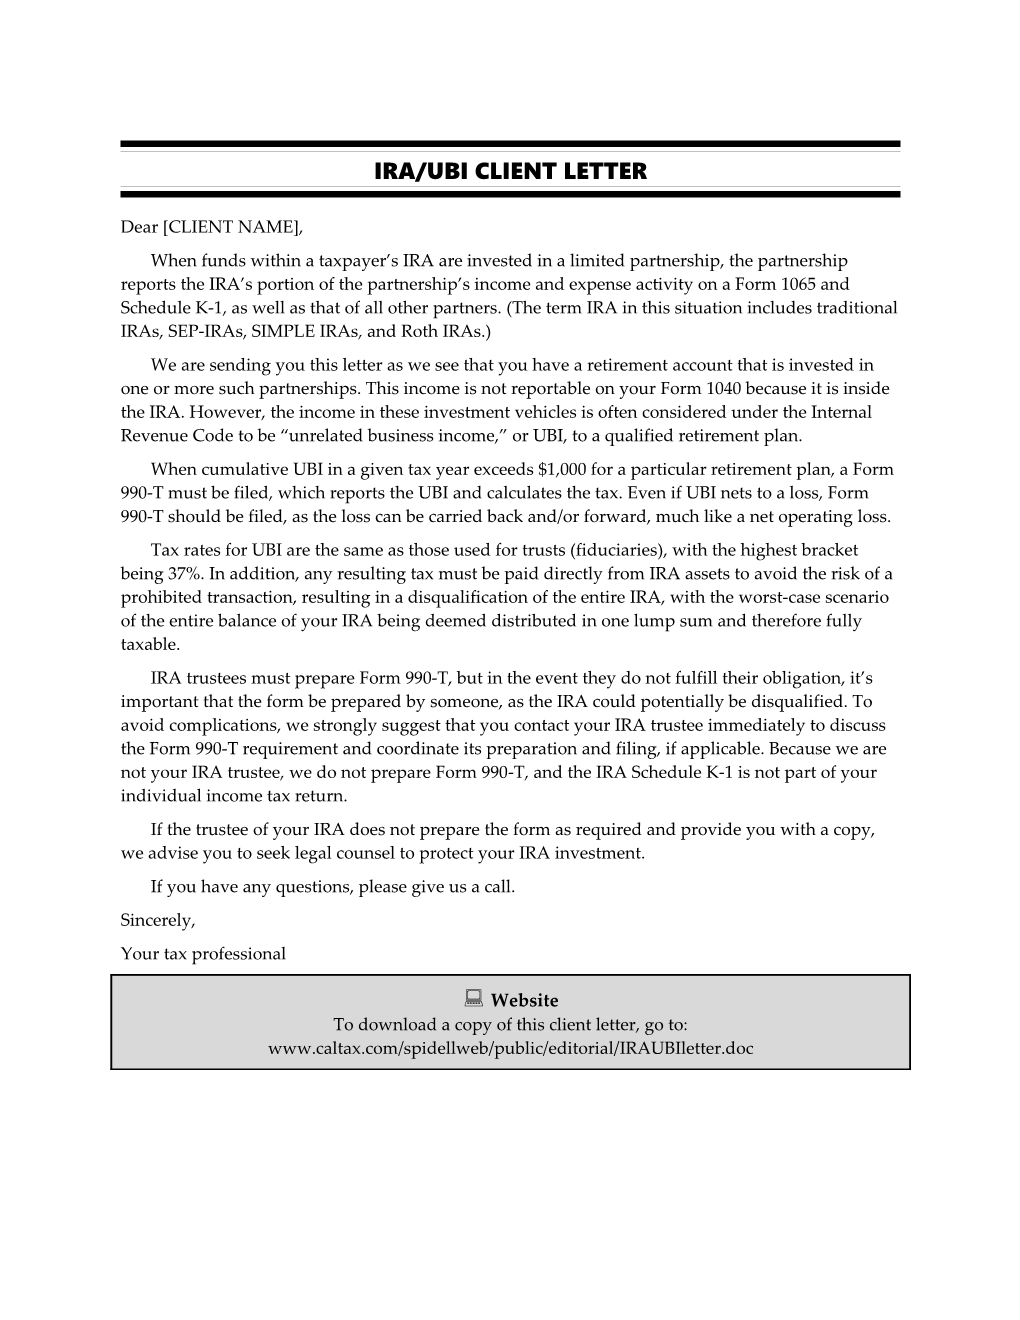 IRA/UBI Client Letter